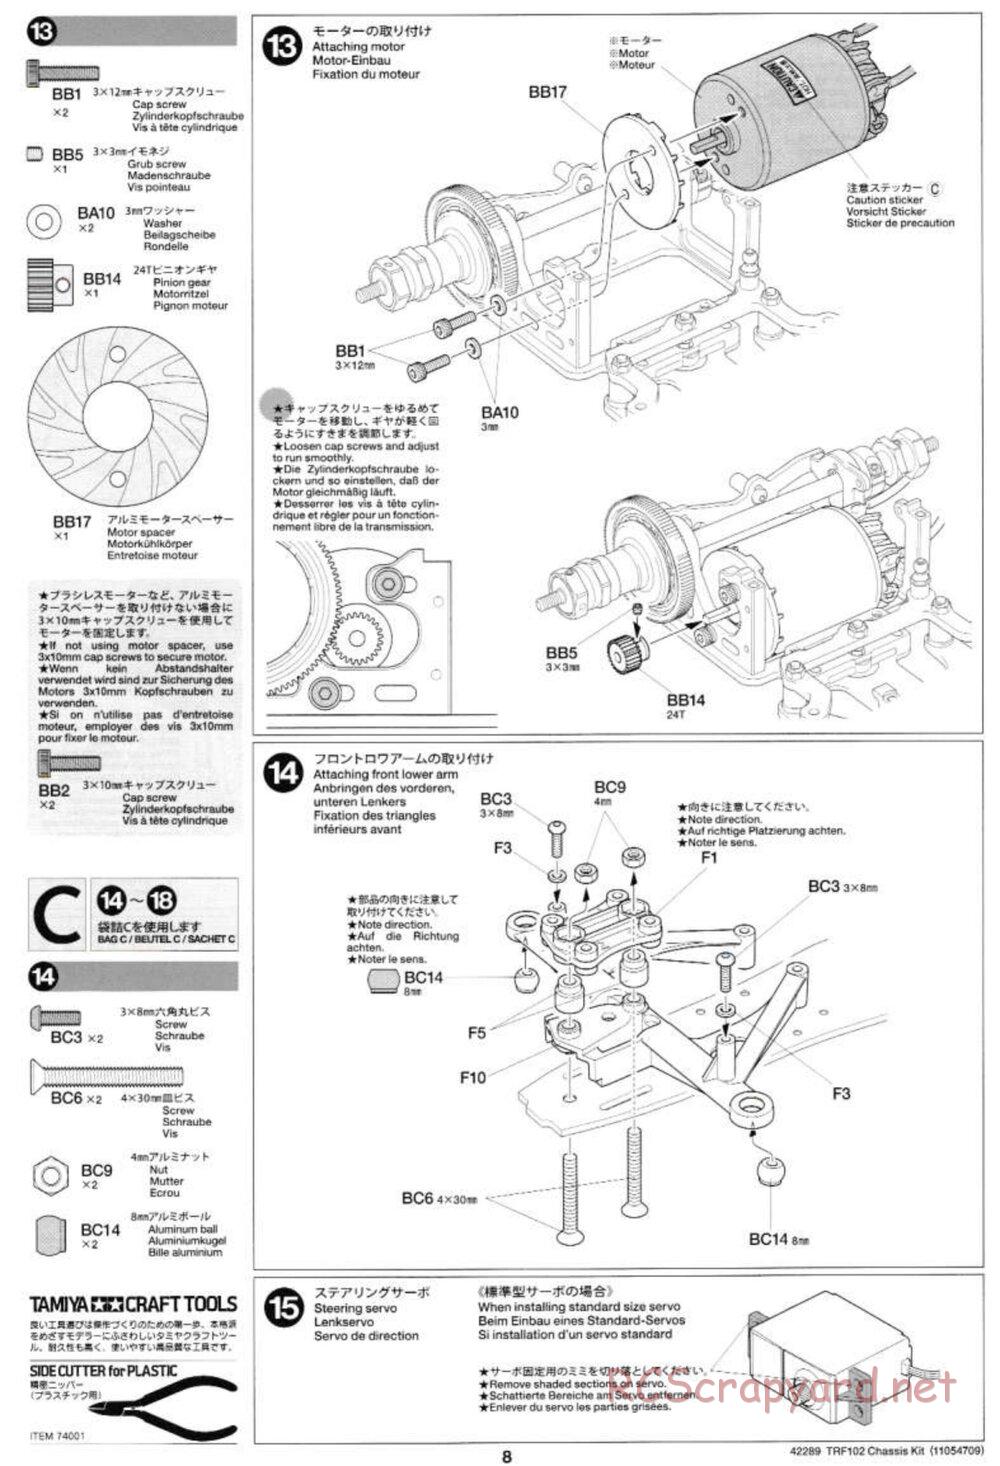 Tamiya - TRF102 Chassis - Manual - Page 8